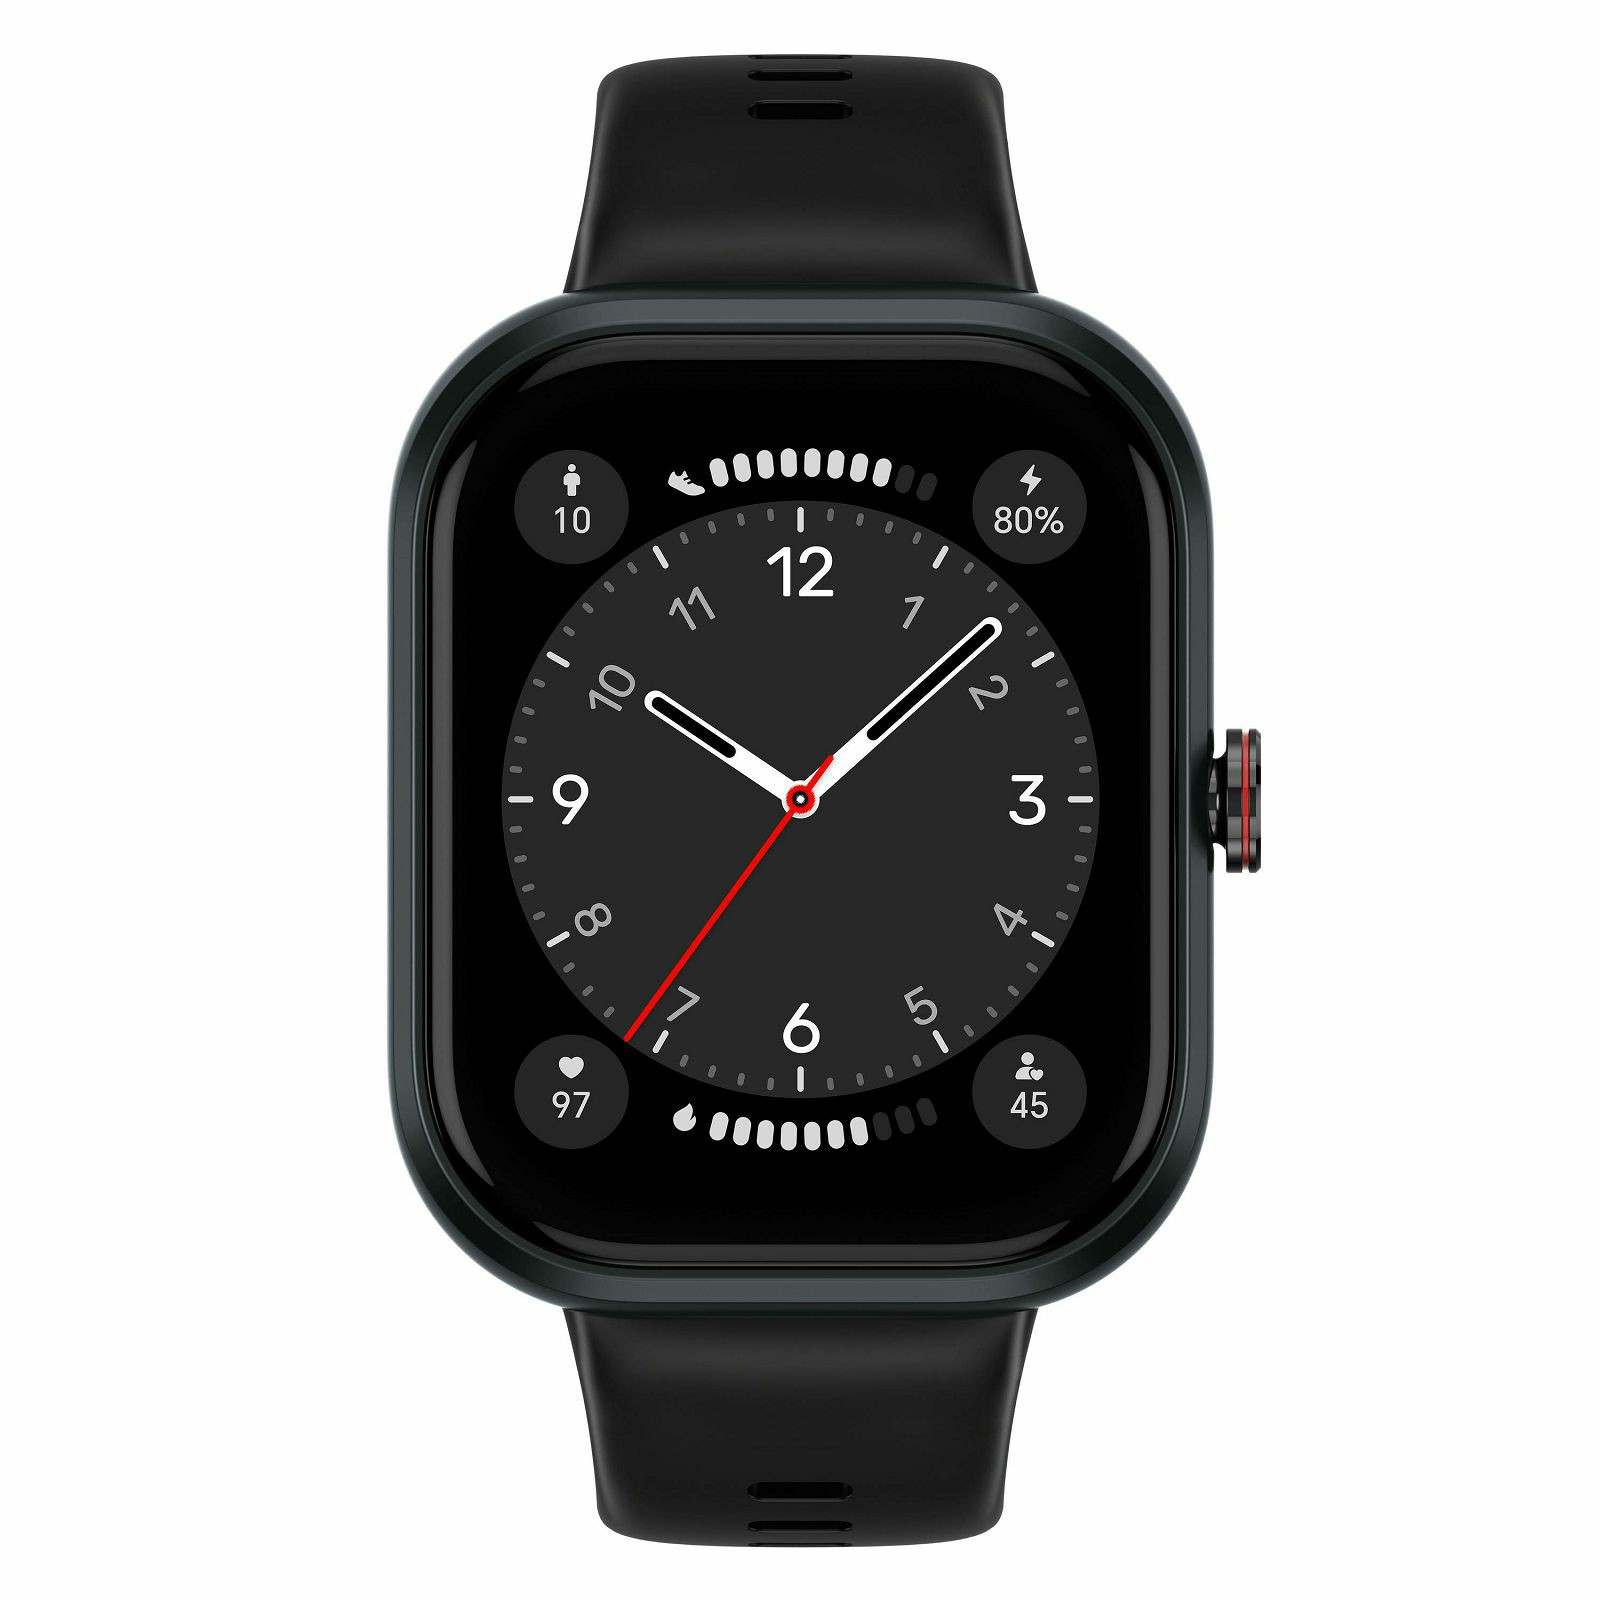 honor-choice-watch-black-99537-73833_1.jpg